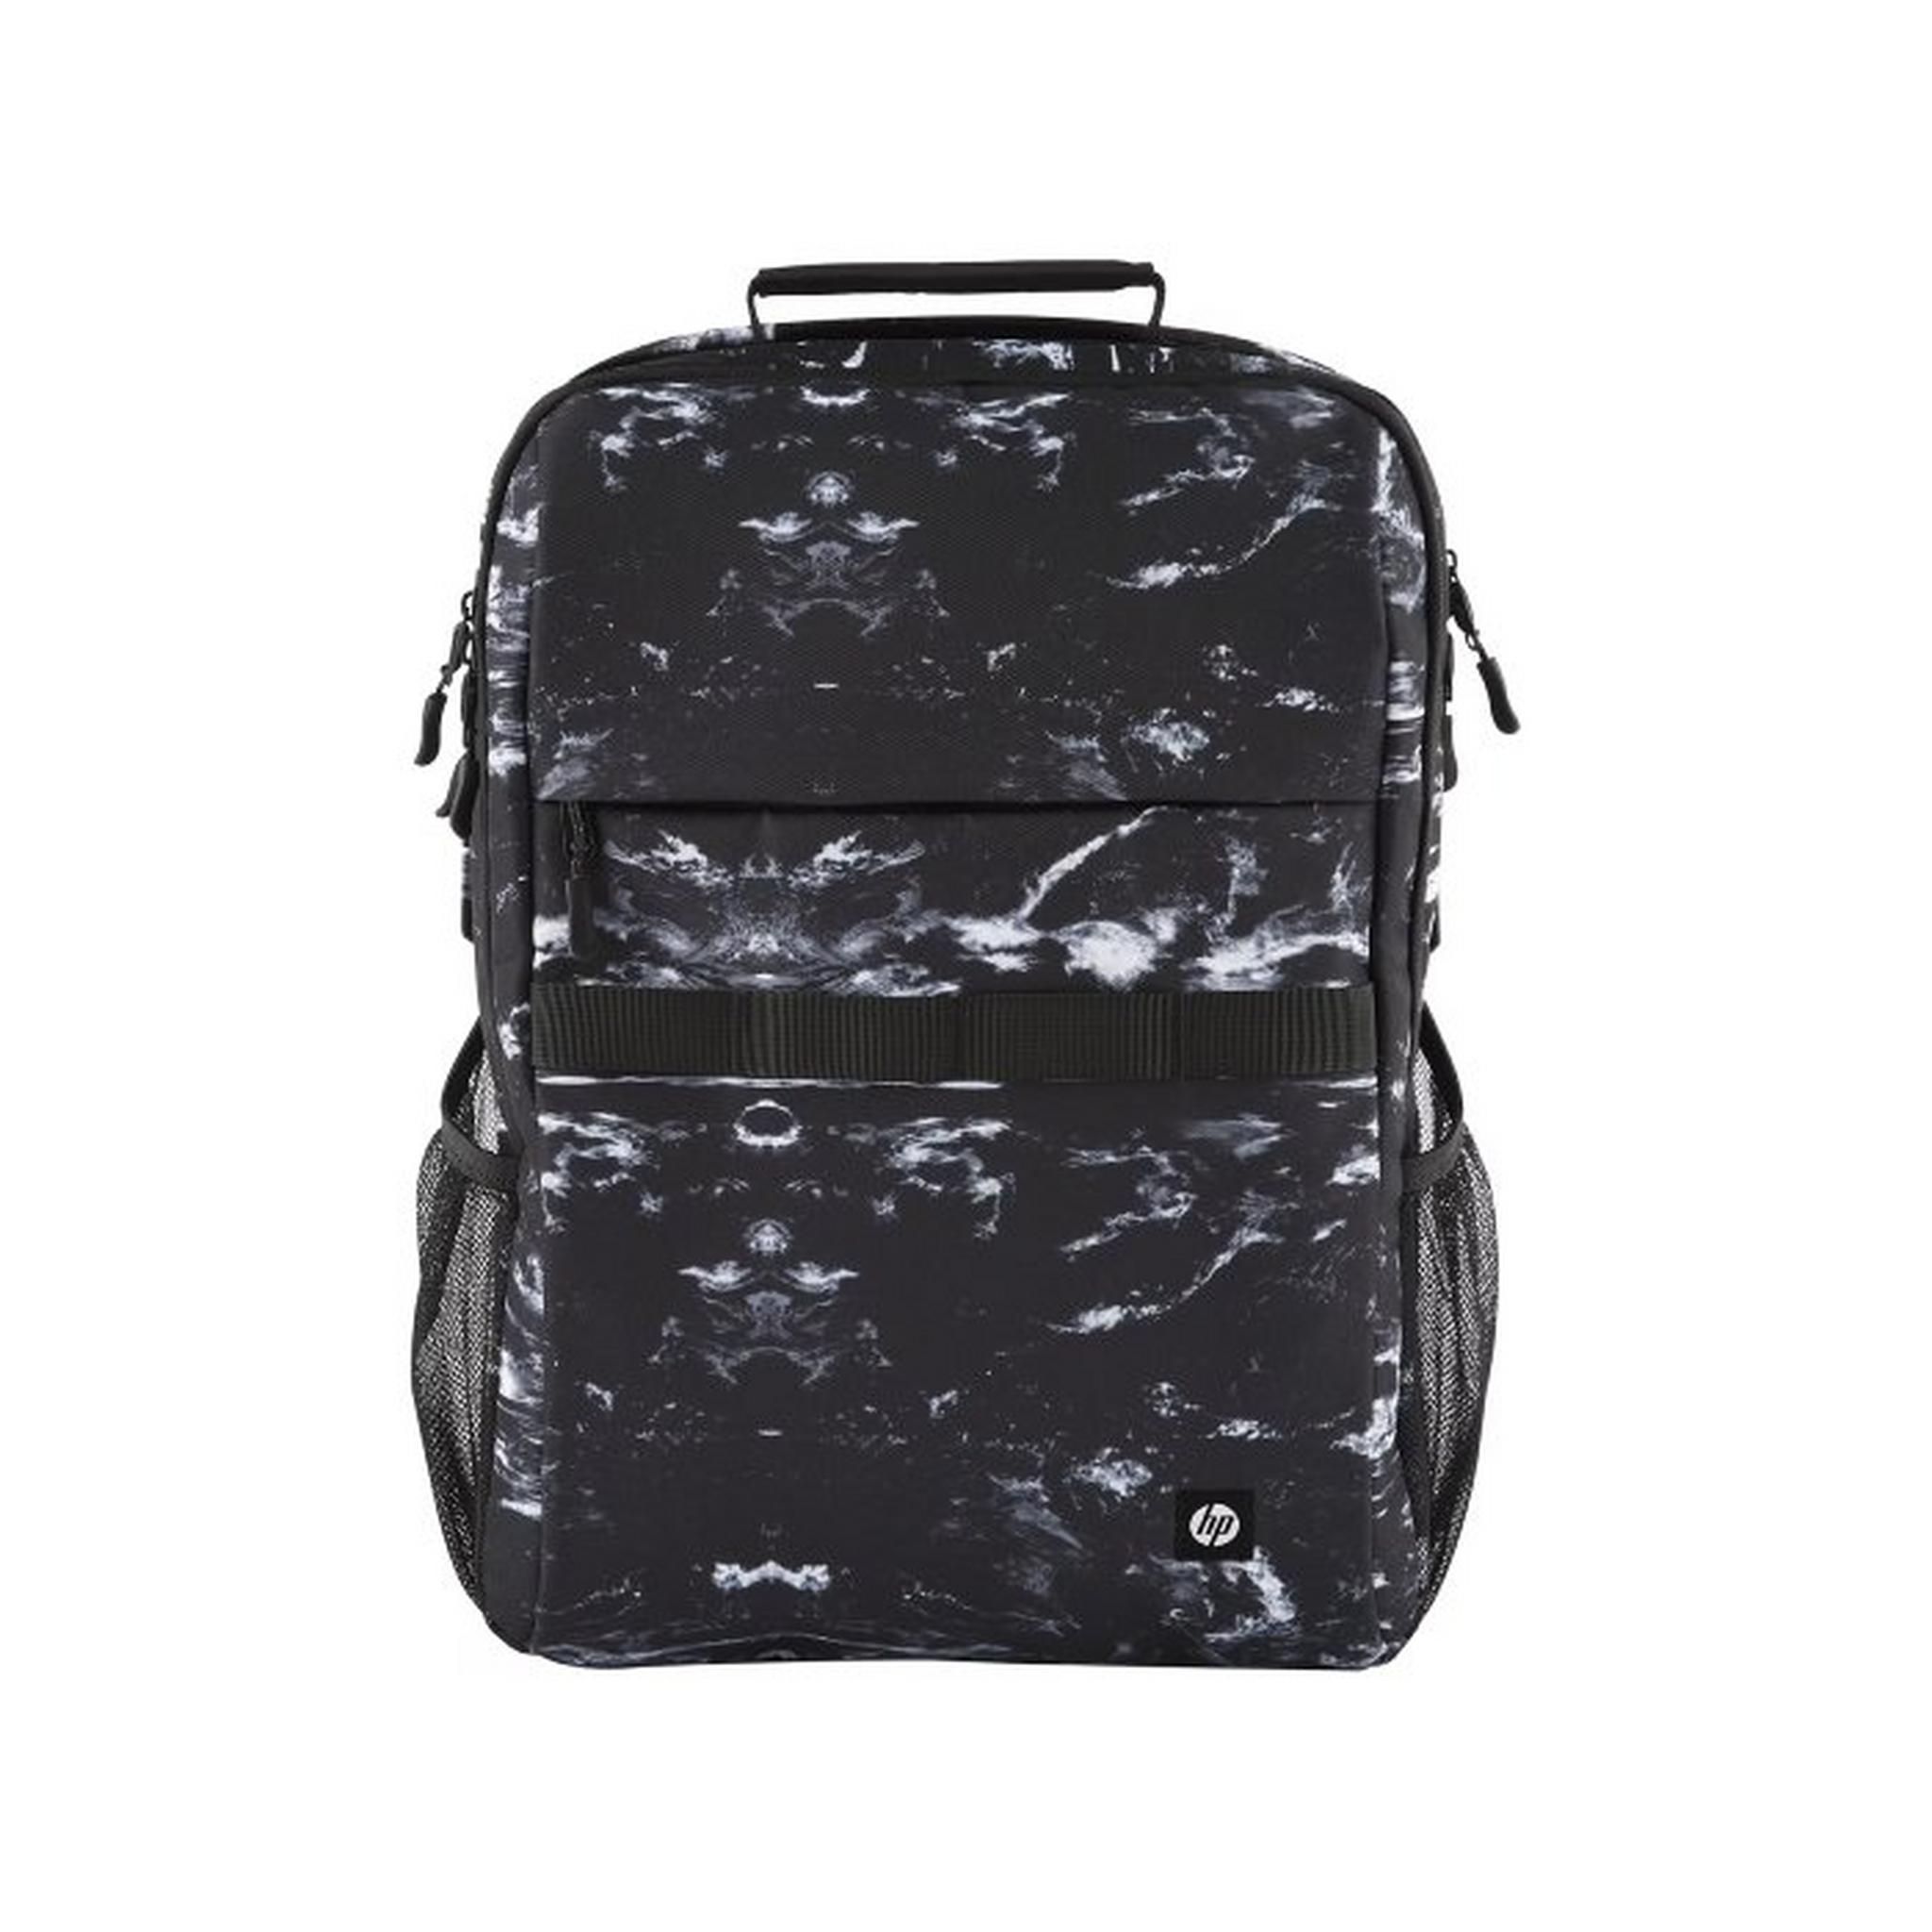 HEWLETT PACKARD Campus 16.1 inch XL Laptop  Backpack, 7J592AA - Black& White